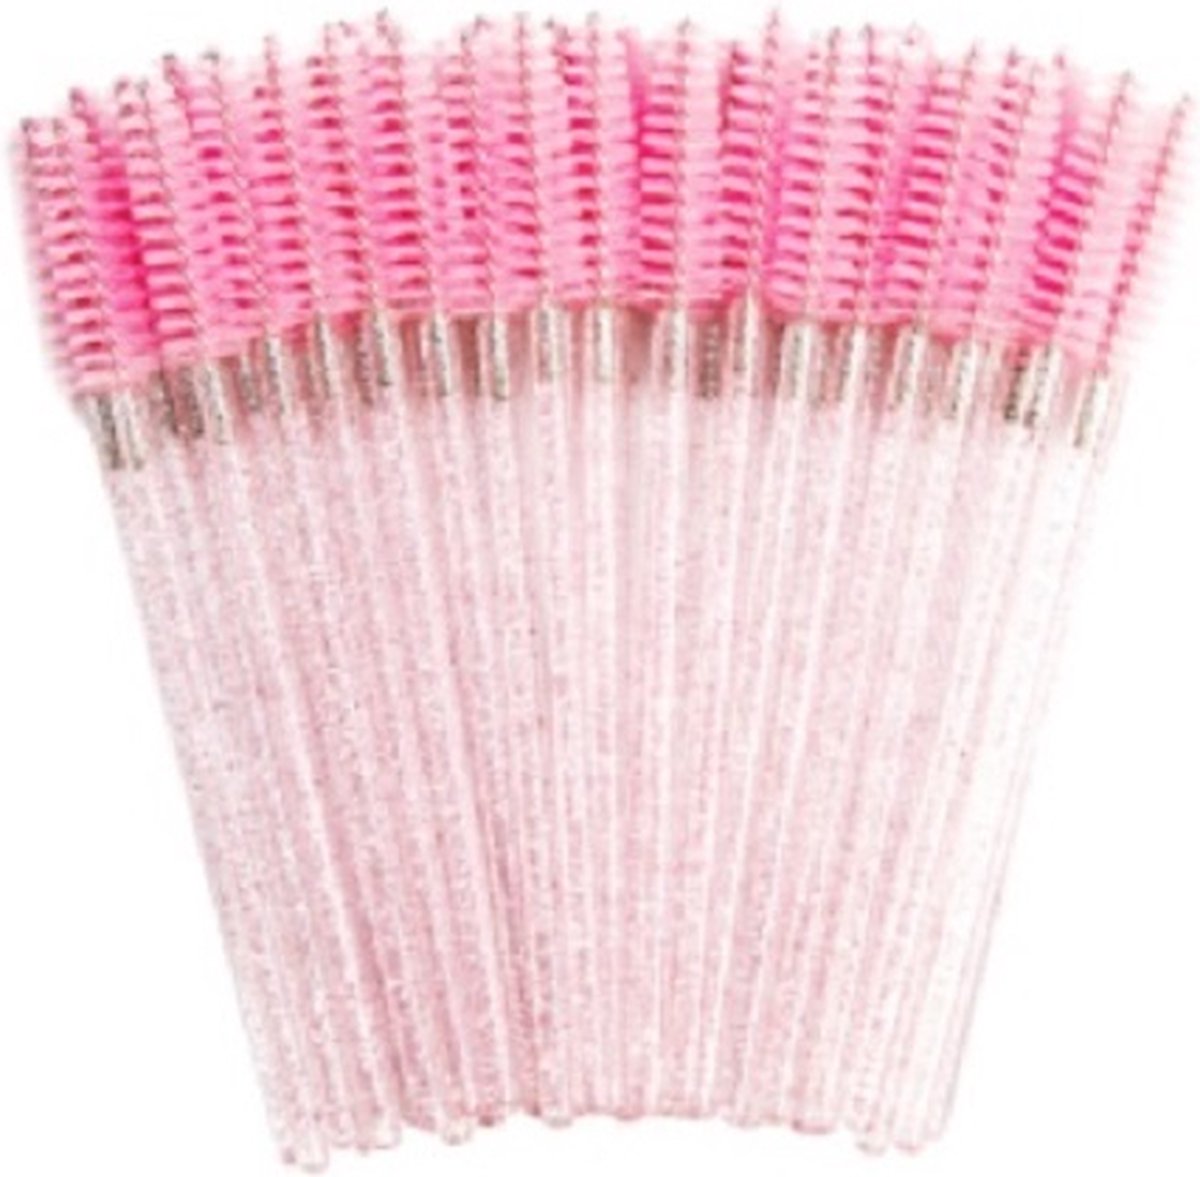 Wimper borsteltjes - Roze glitter